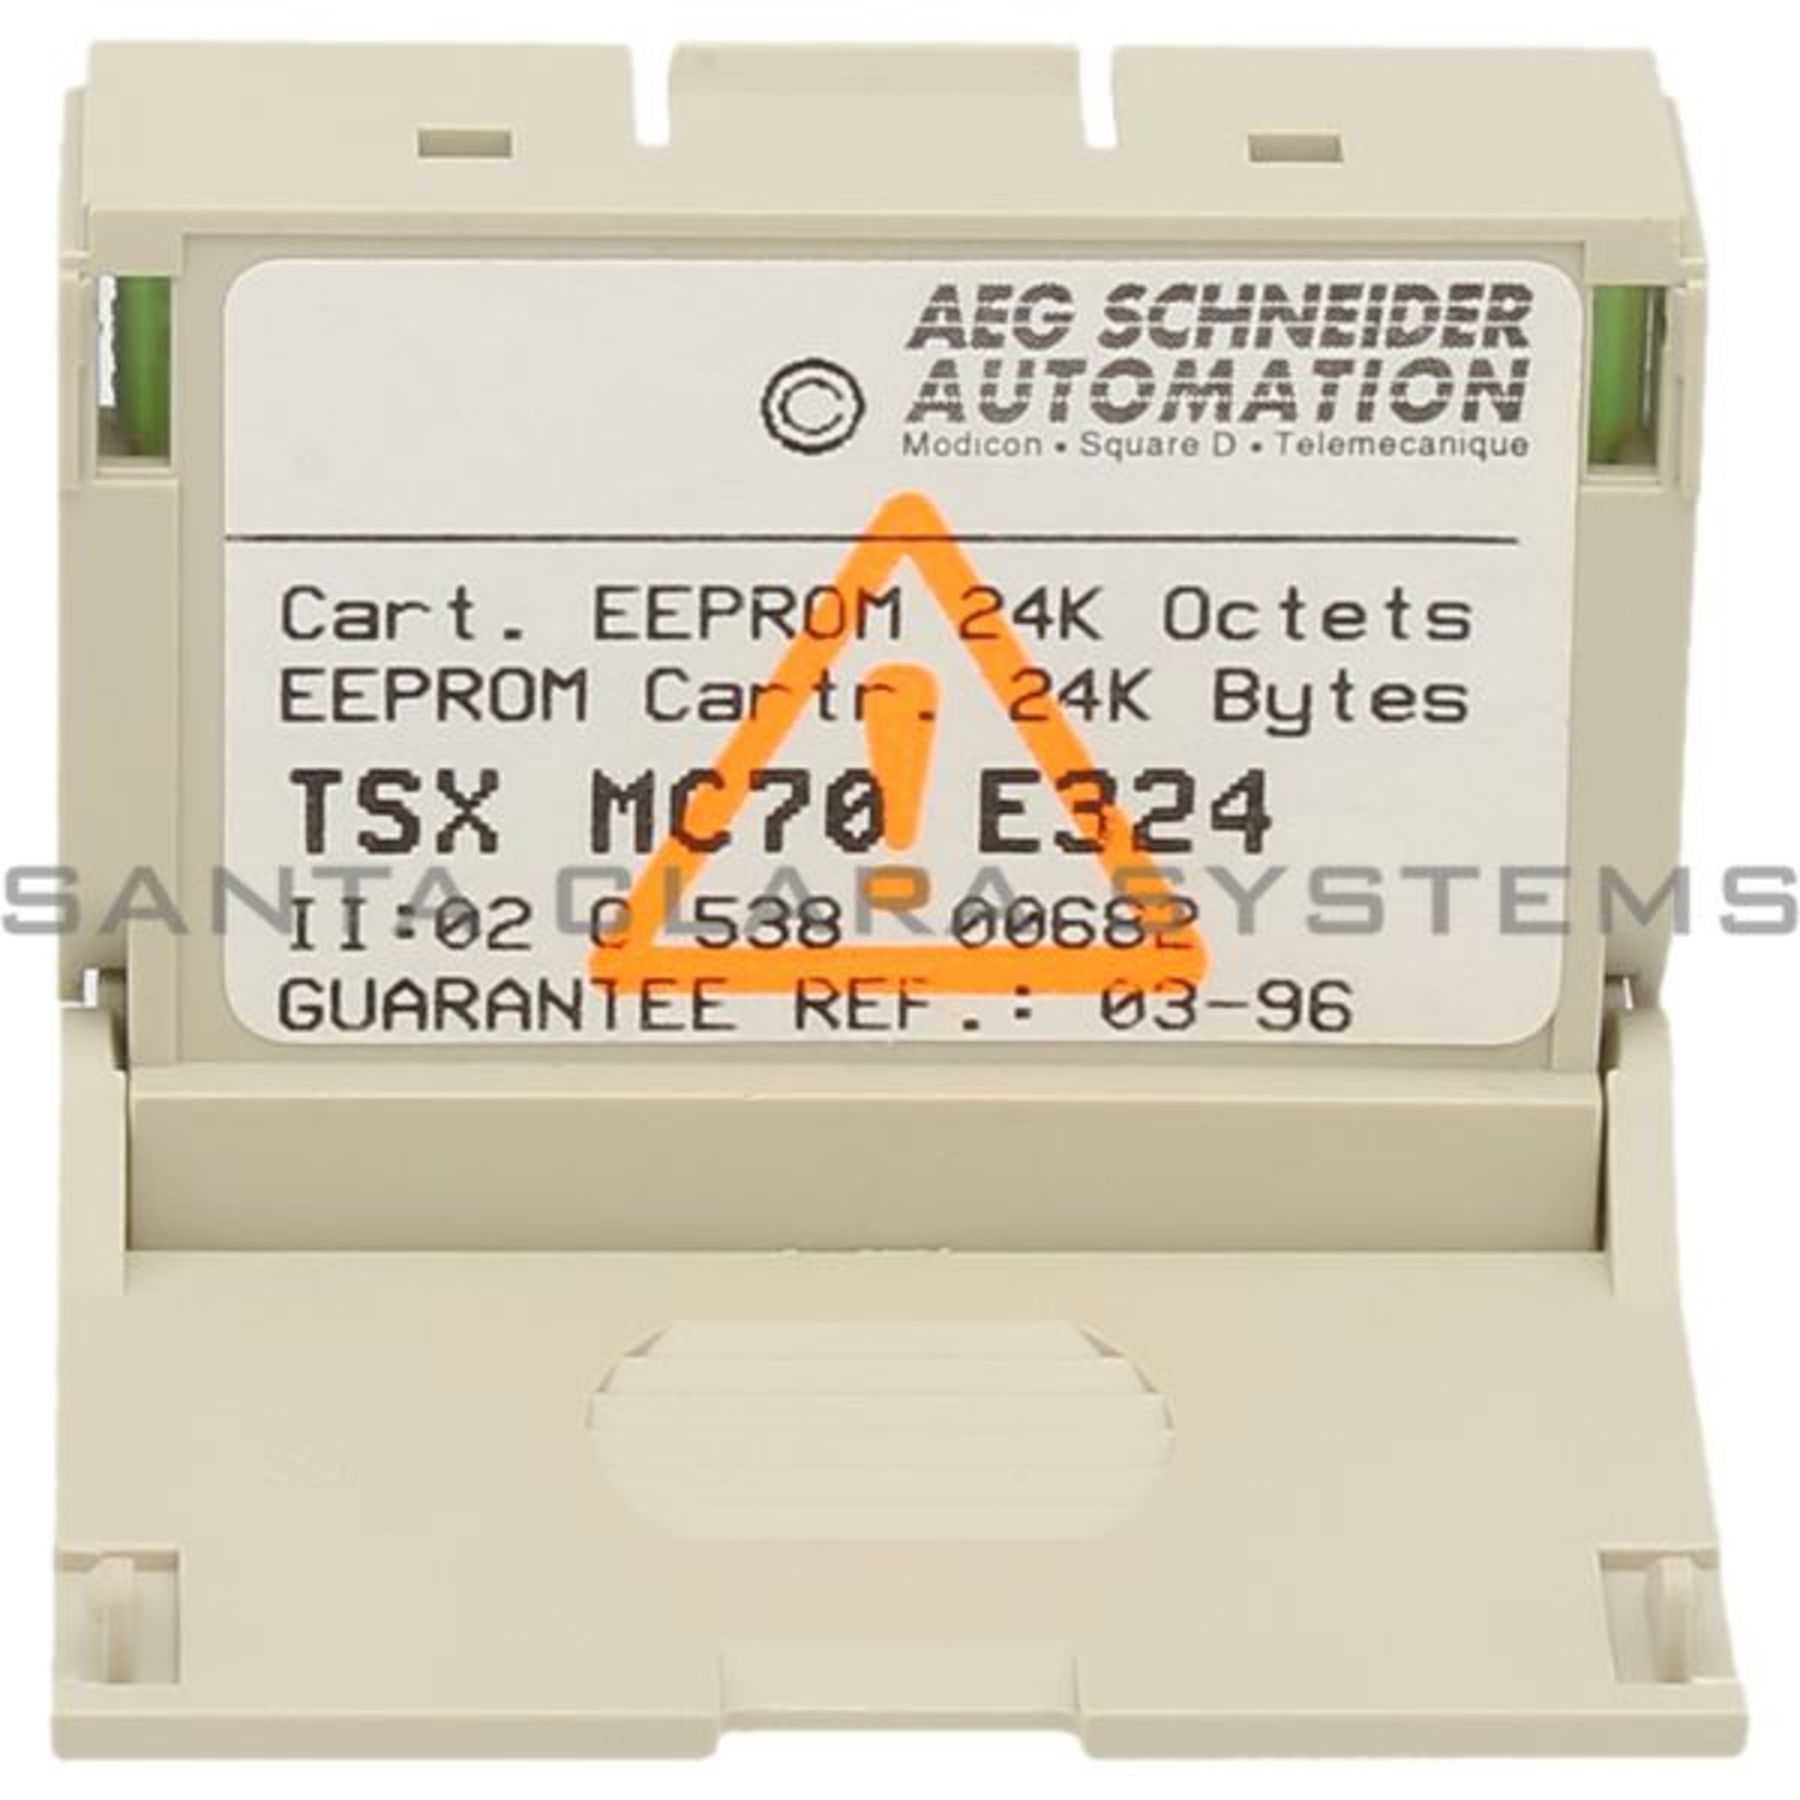 TSXMC70E324 TSXMC70 E324 TELEMECANIQUE CARTOUCHE EEPROM 24K BYTES USED 